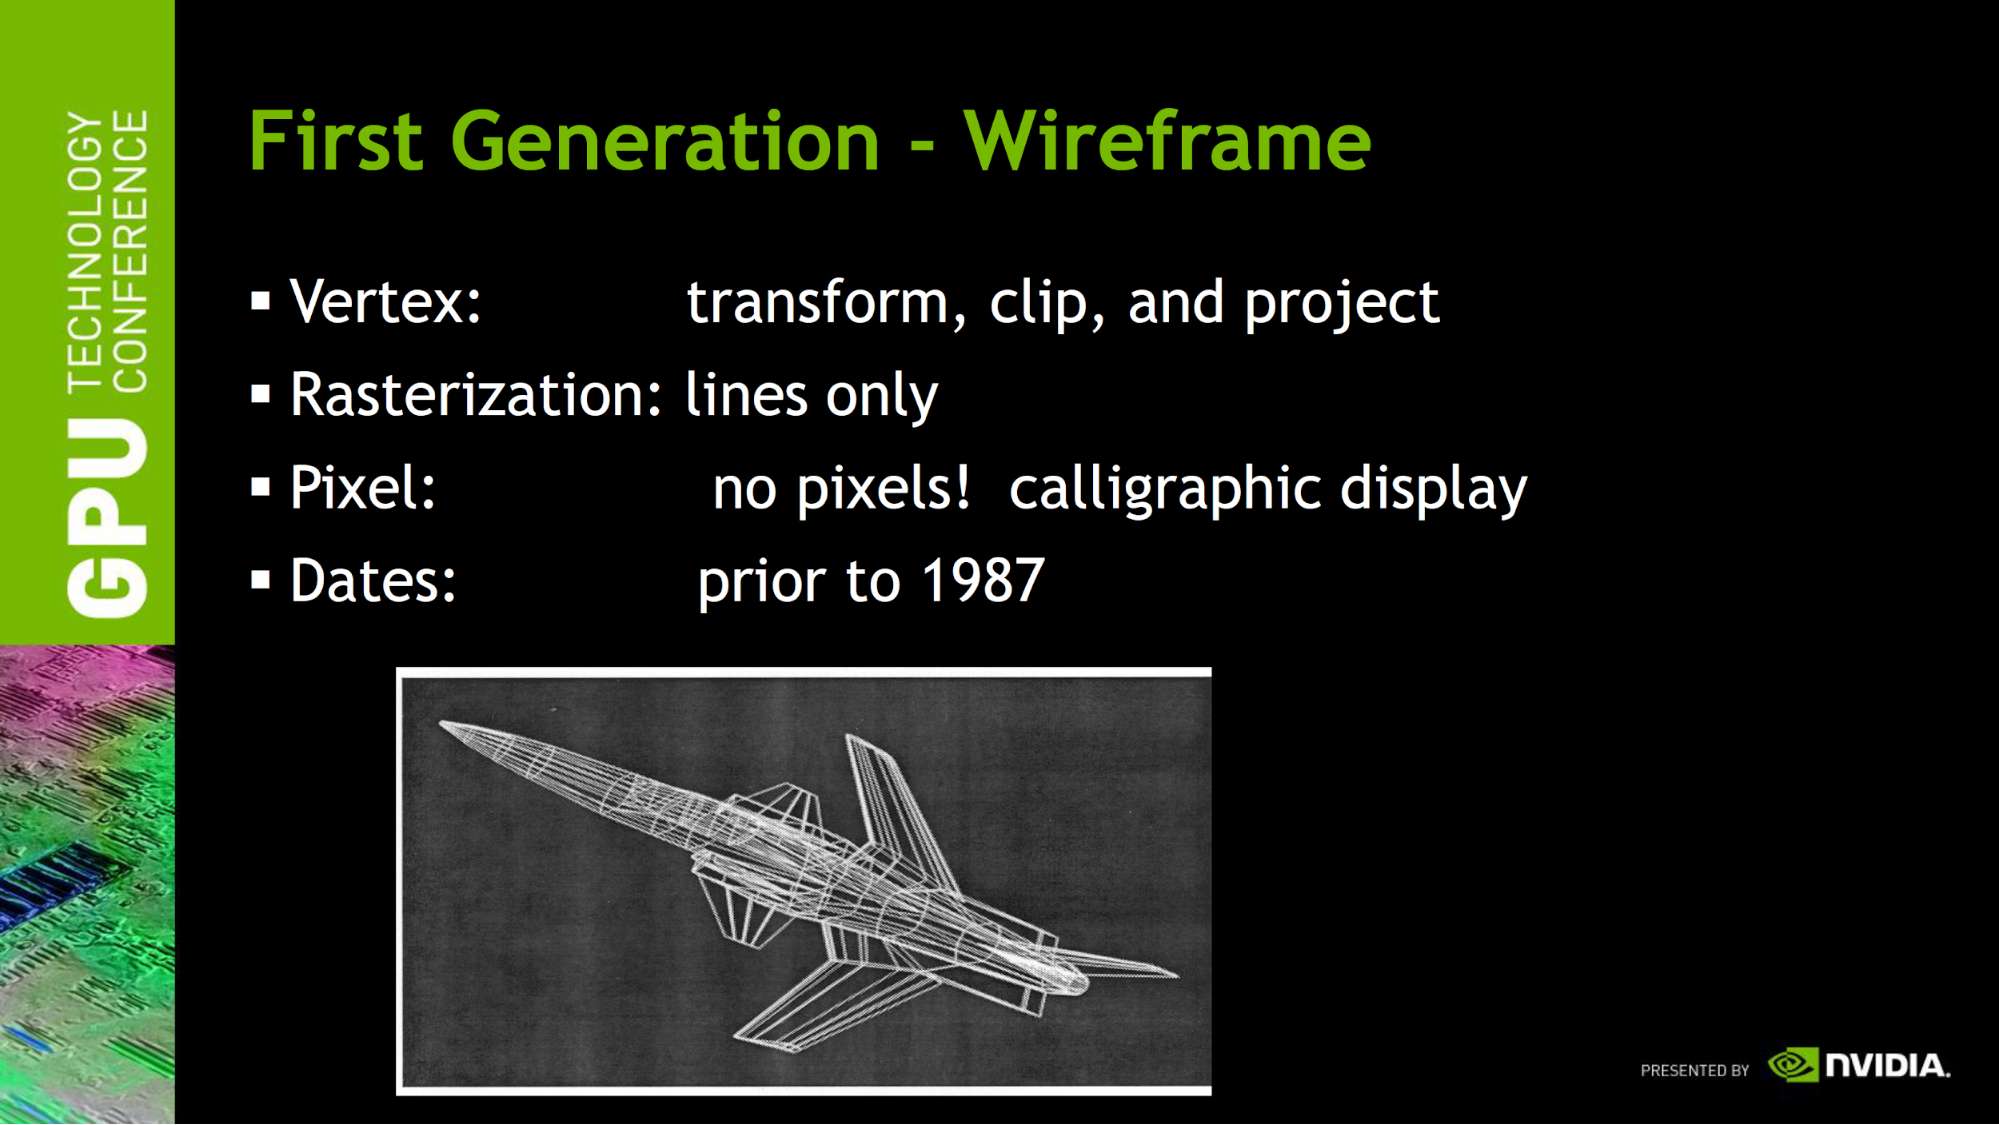 照片中提到了First Generation - Wireframe、- Vertex:、transform, clip, and project，包含了gtc 2015、印度、線、產品、儀表